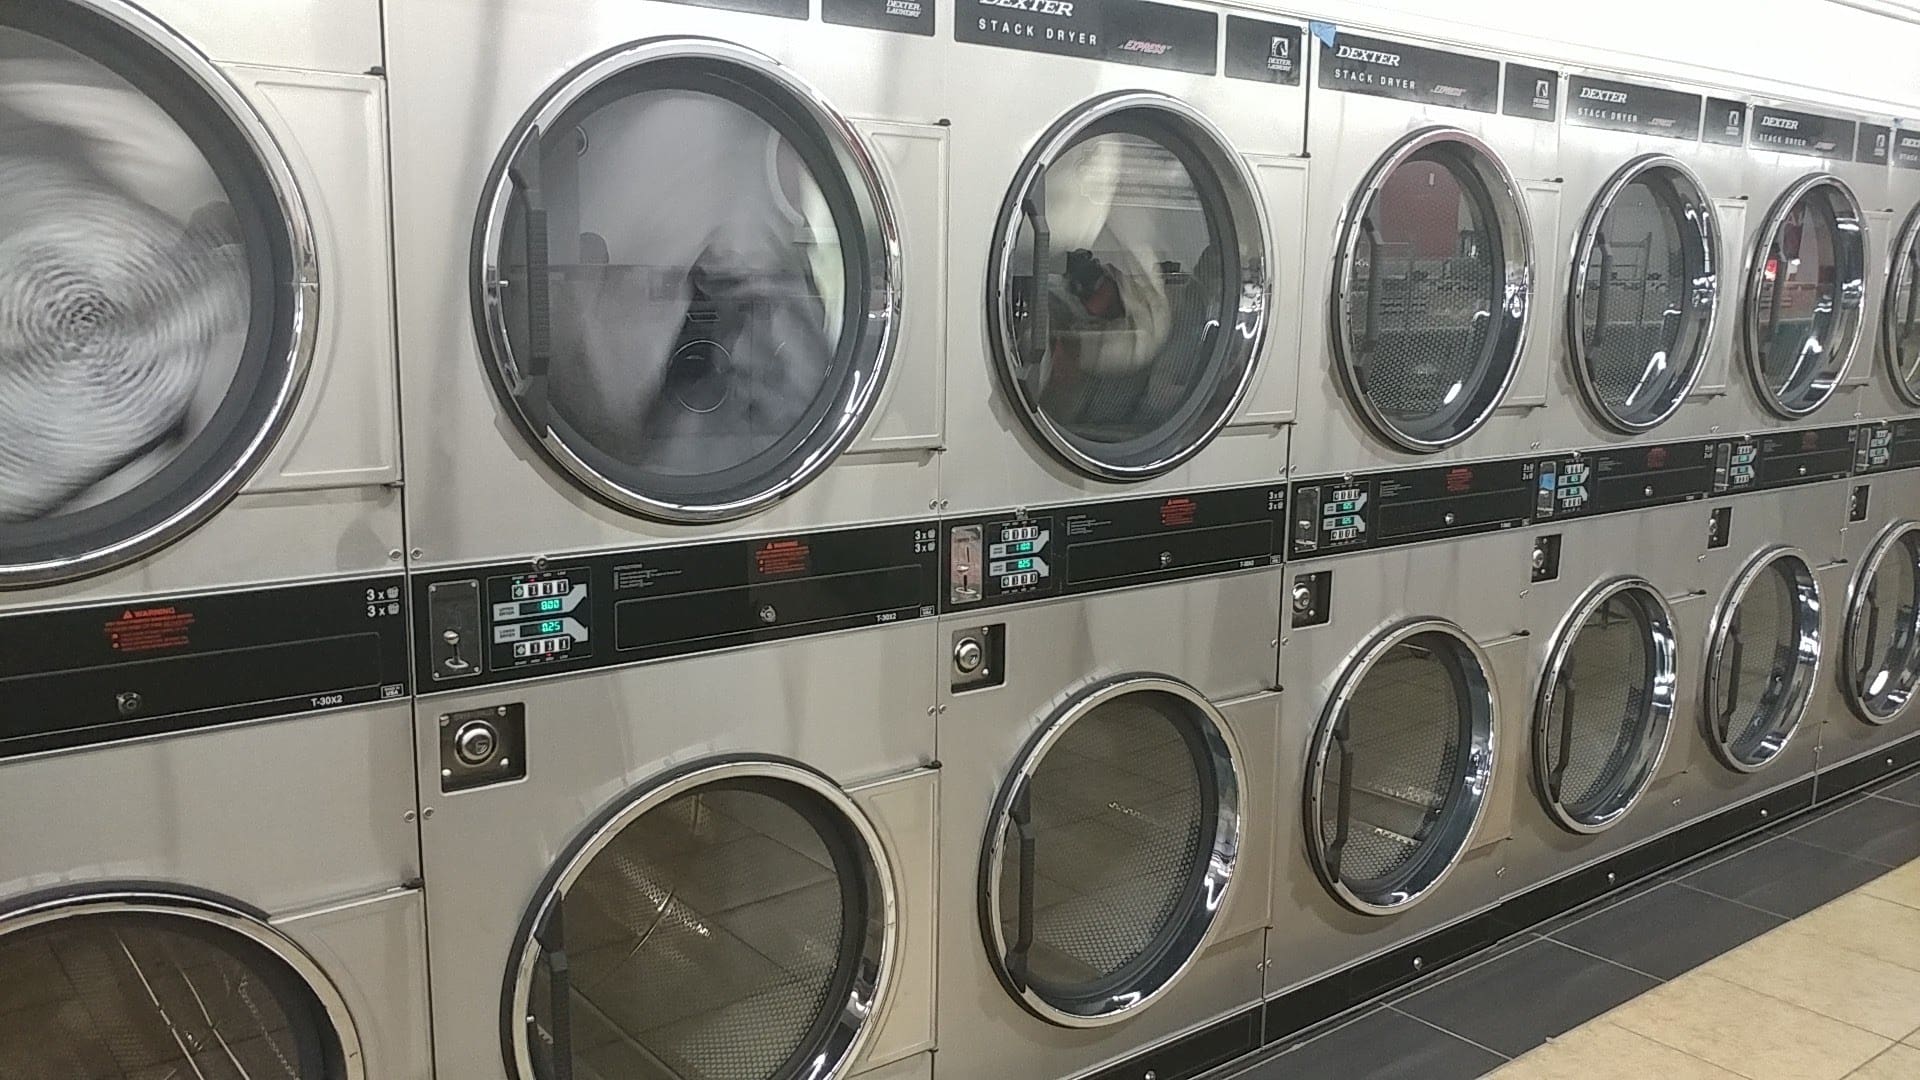 Lavanderia Coin Laundry - Pomona, CA, US, 24 hour laundromat near me open now